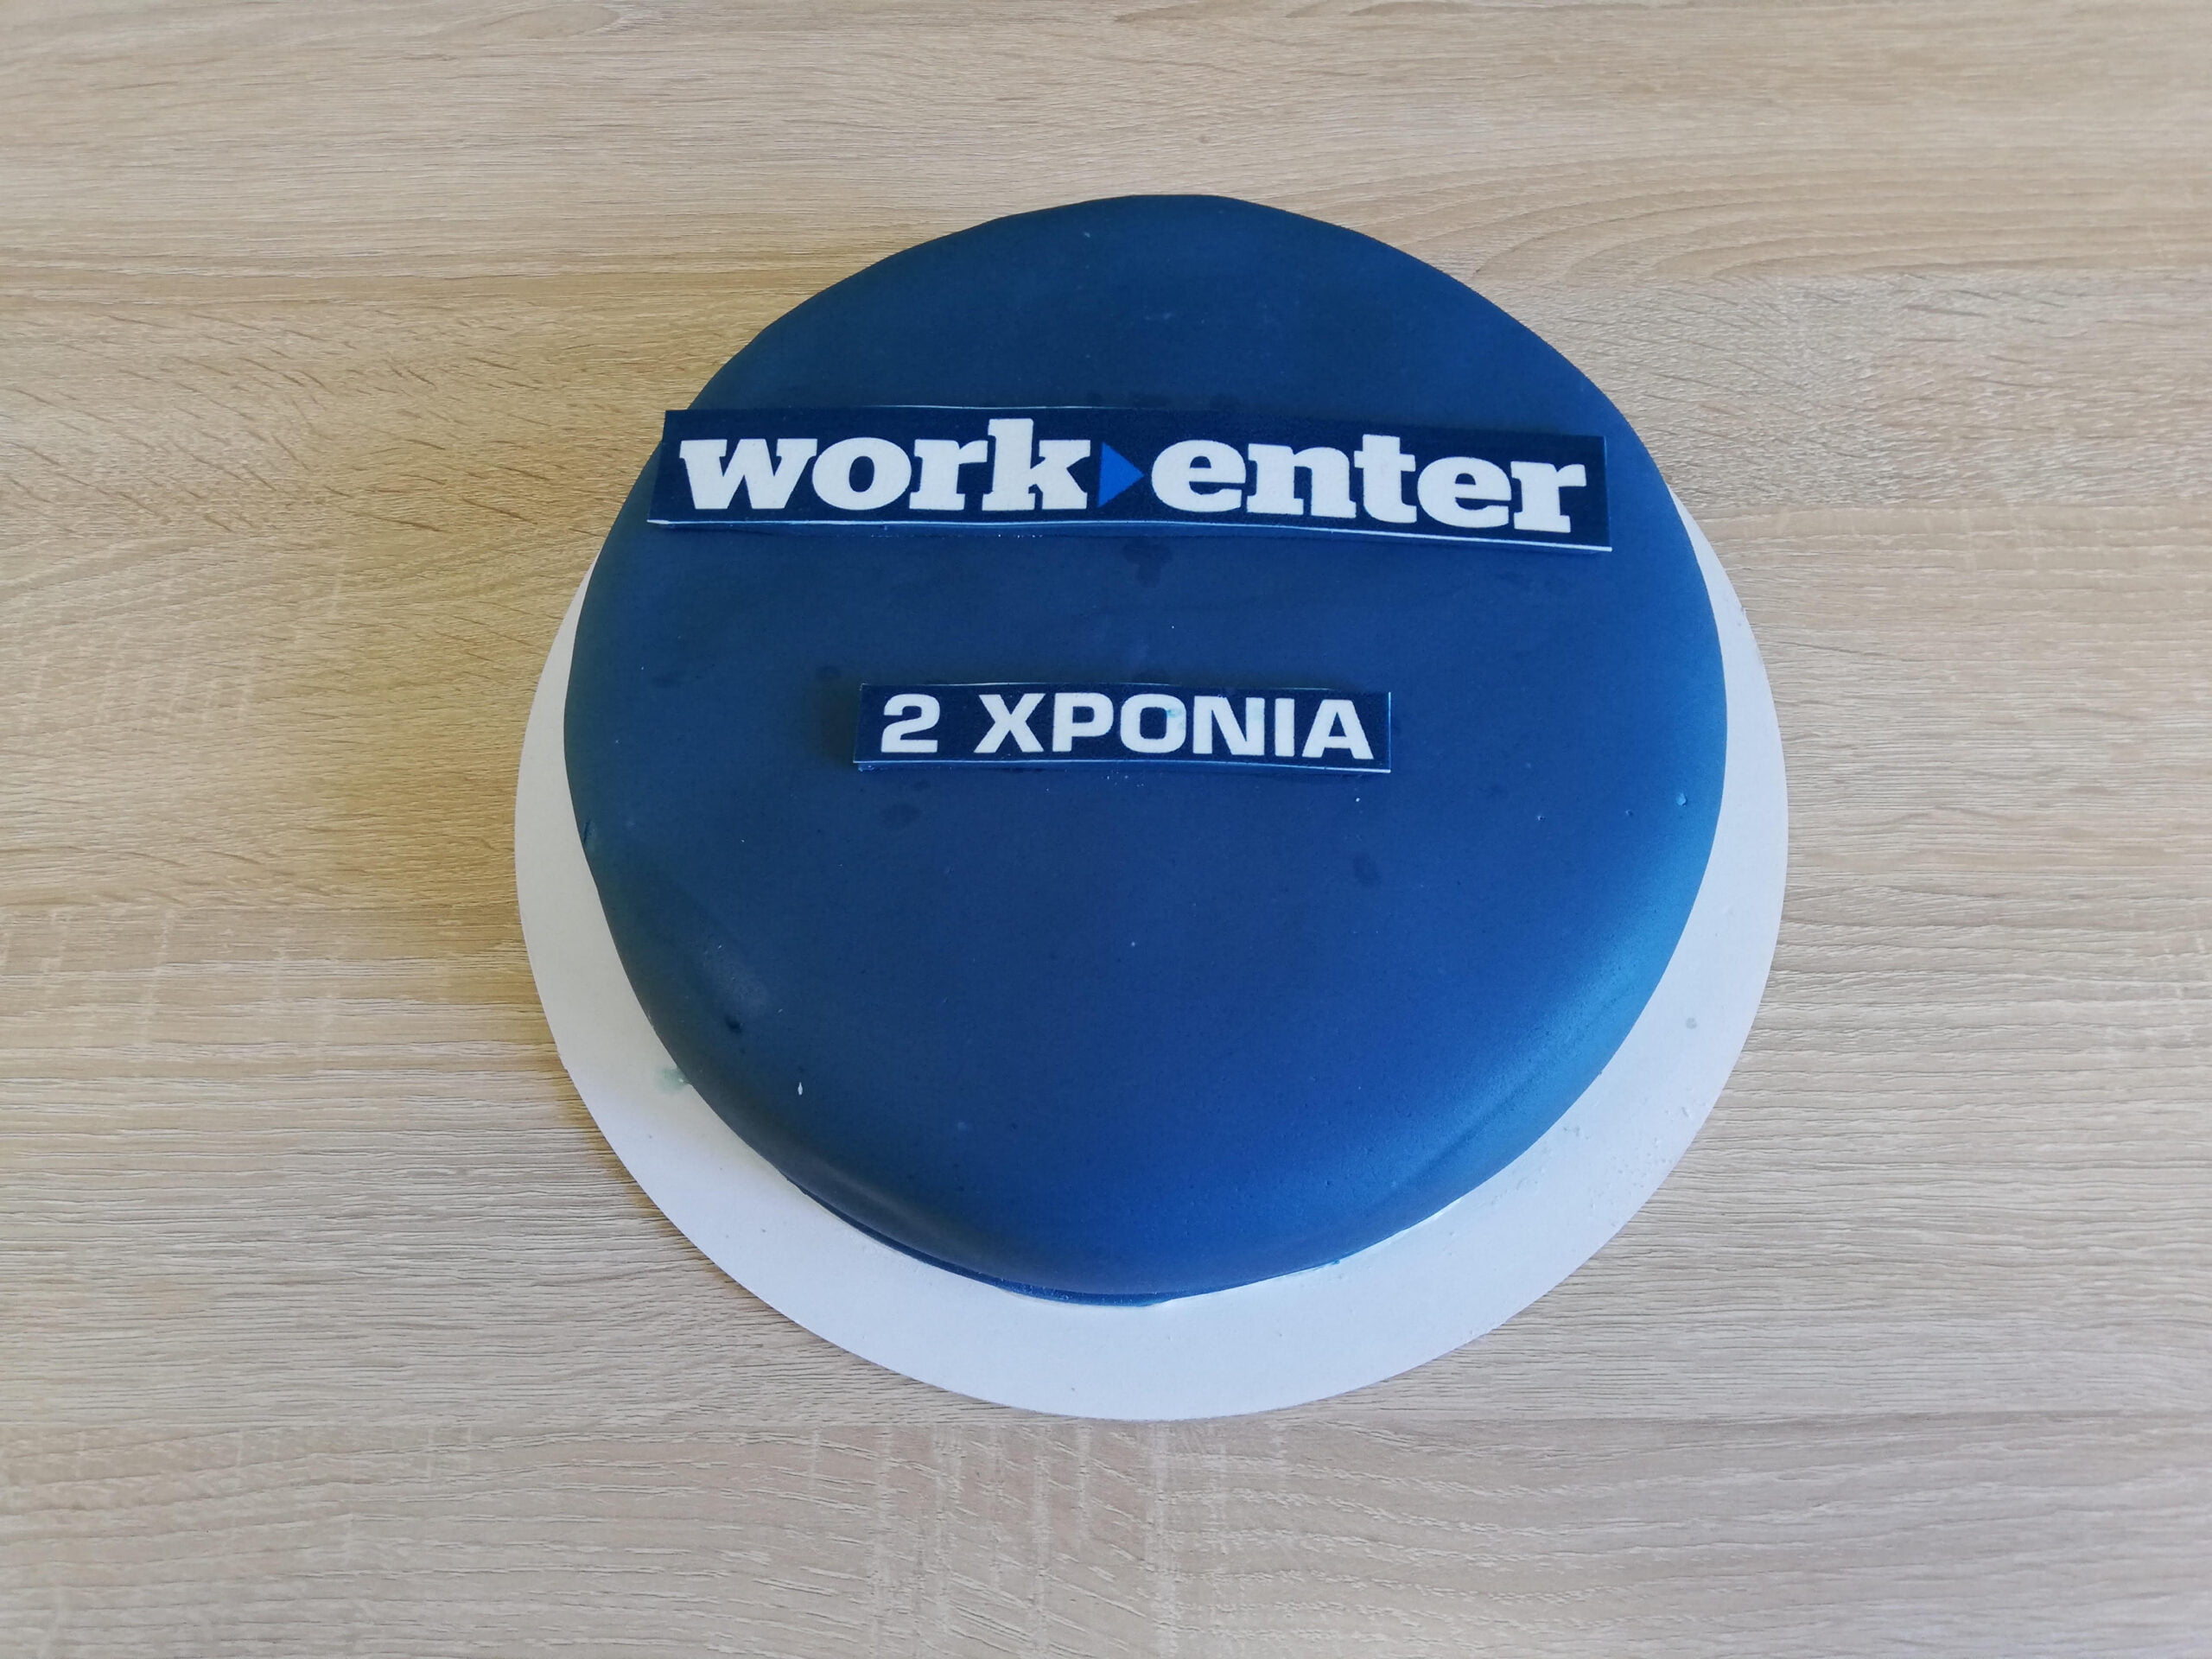 workenter.gr: Δύο χρόνια μαζί!